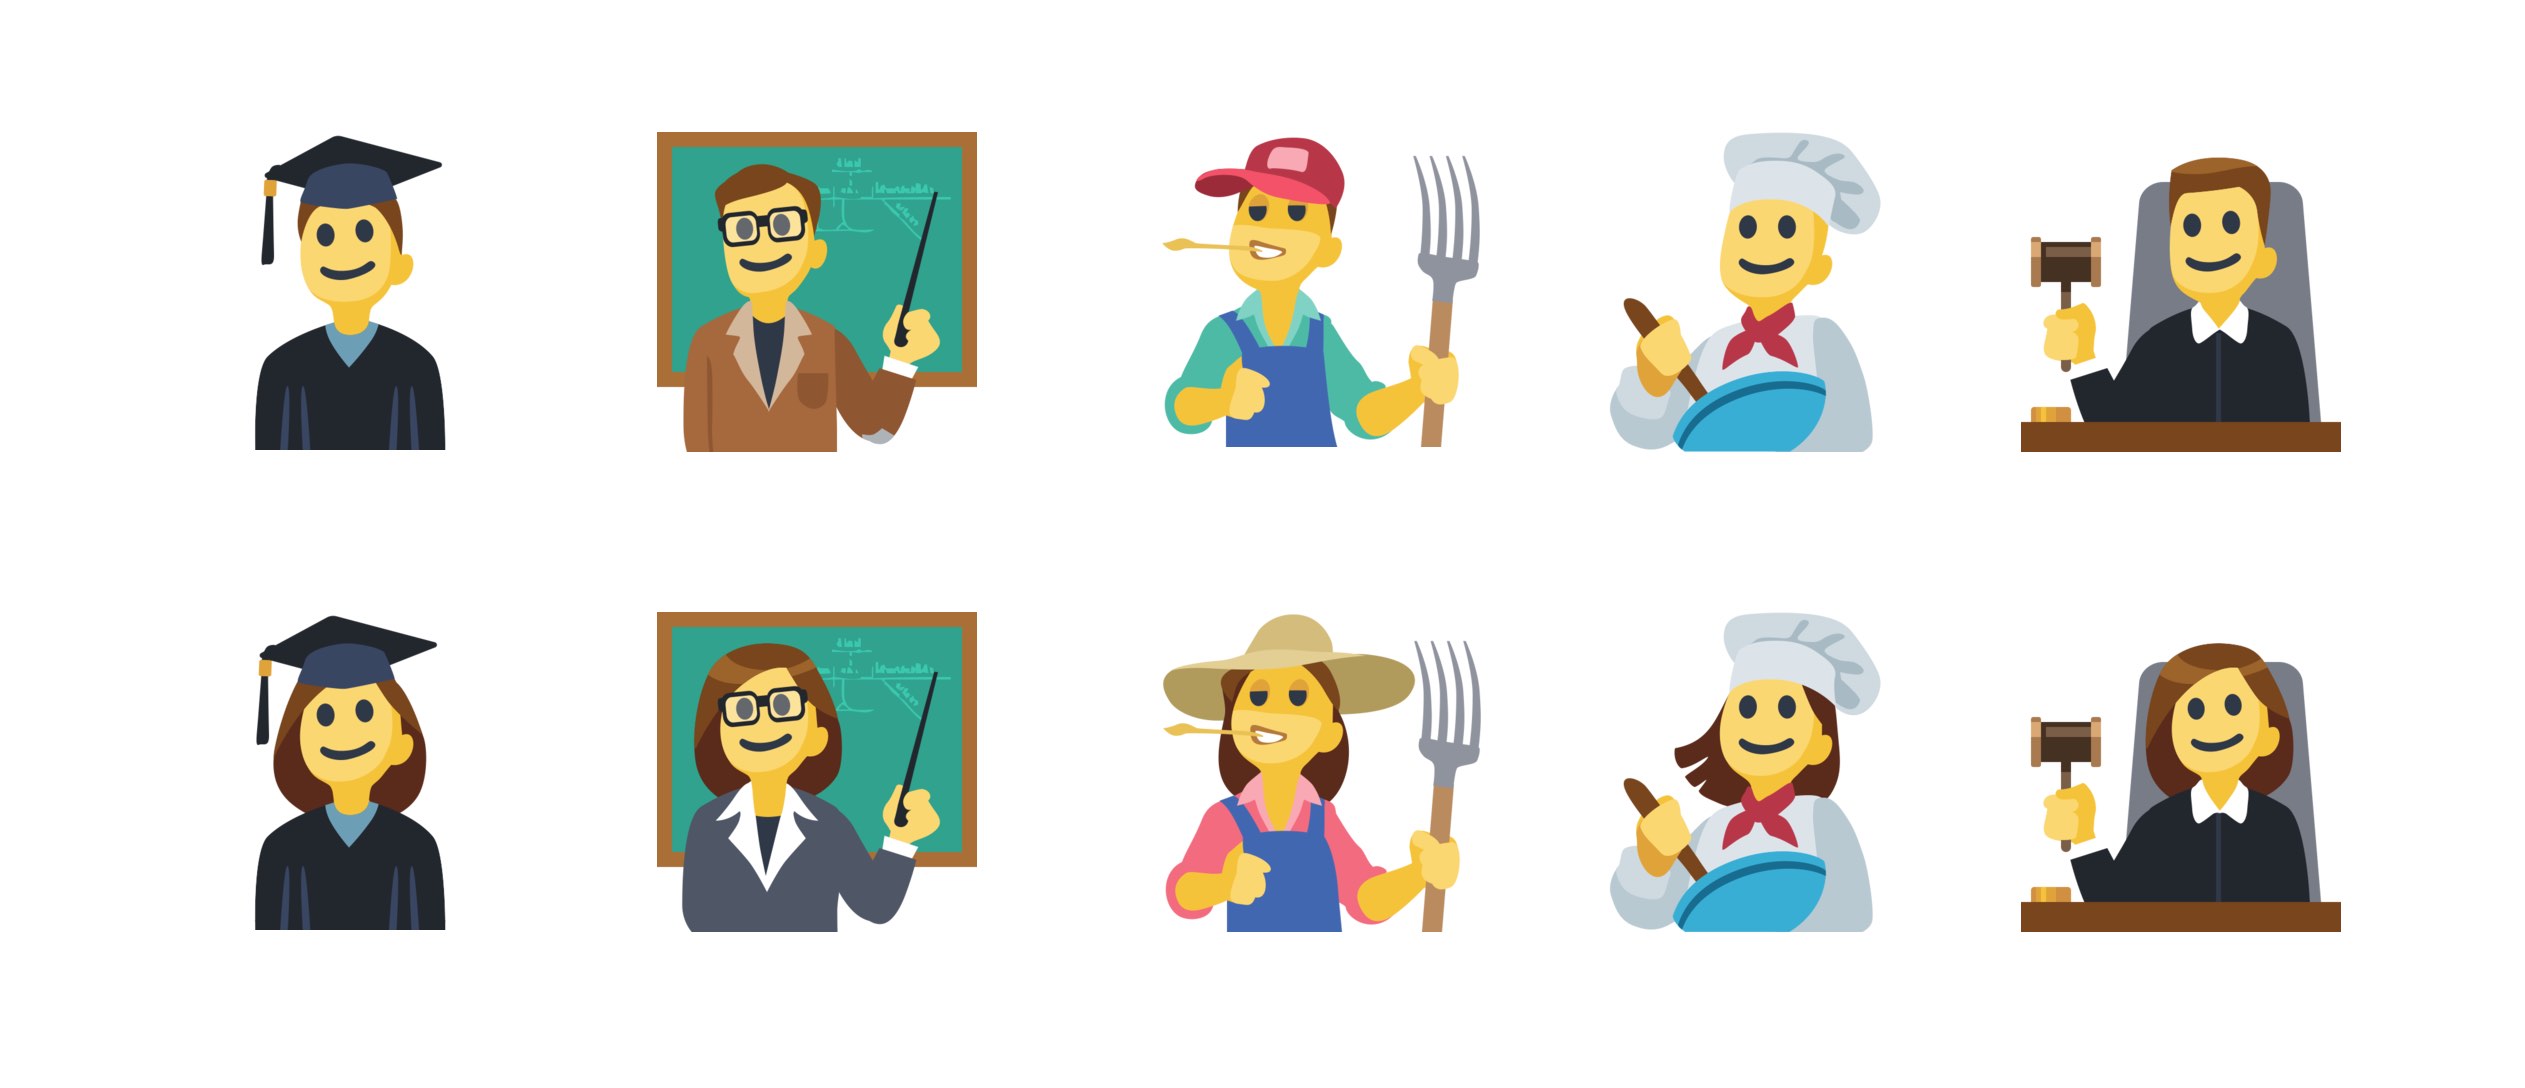 Facebook lança novos Emojis 1